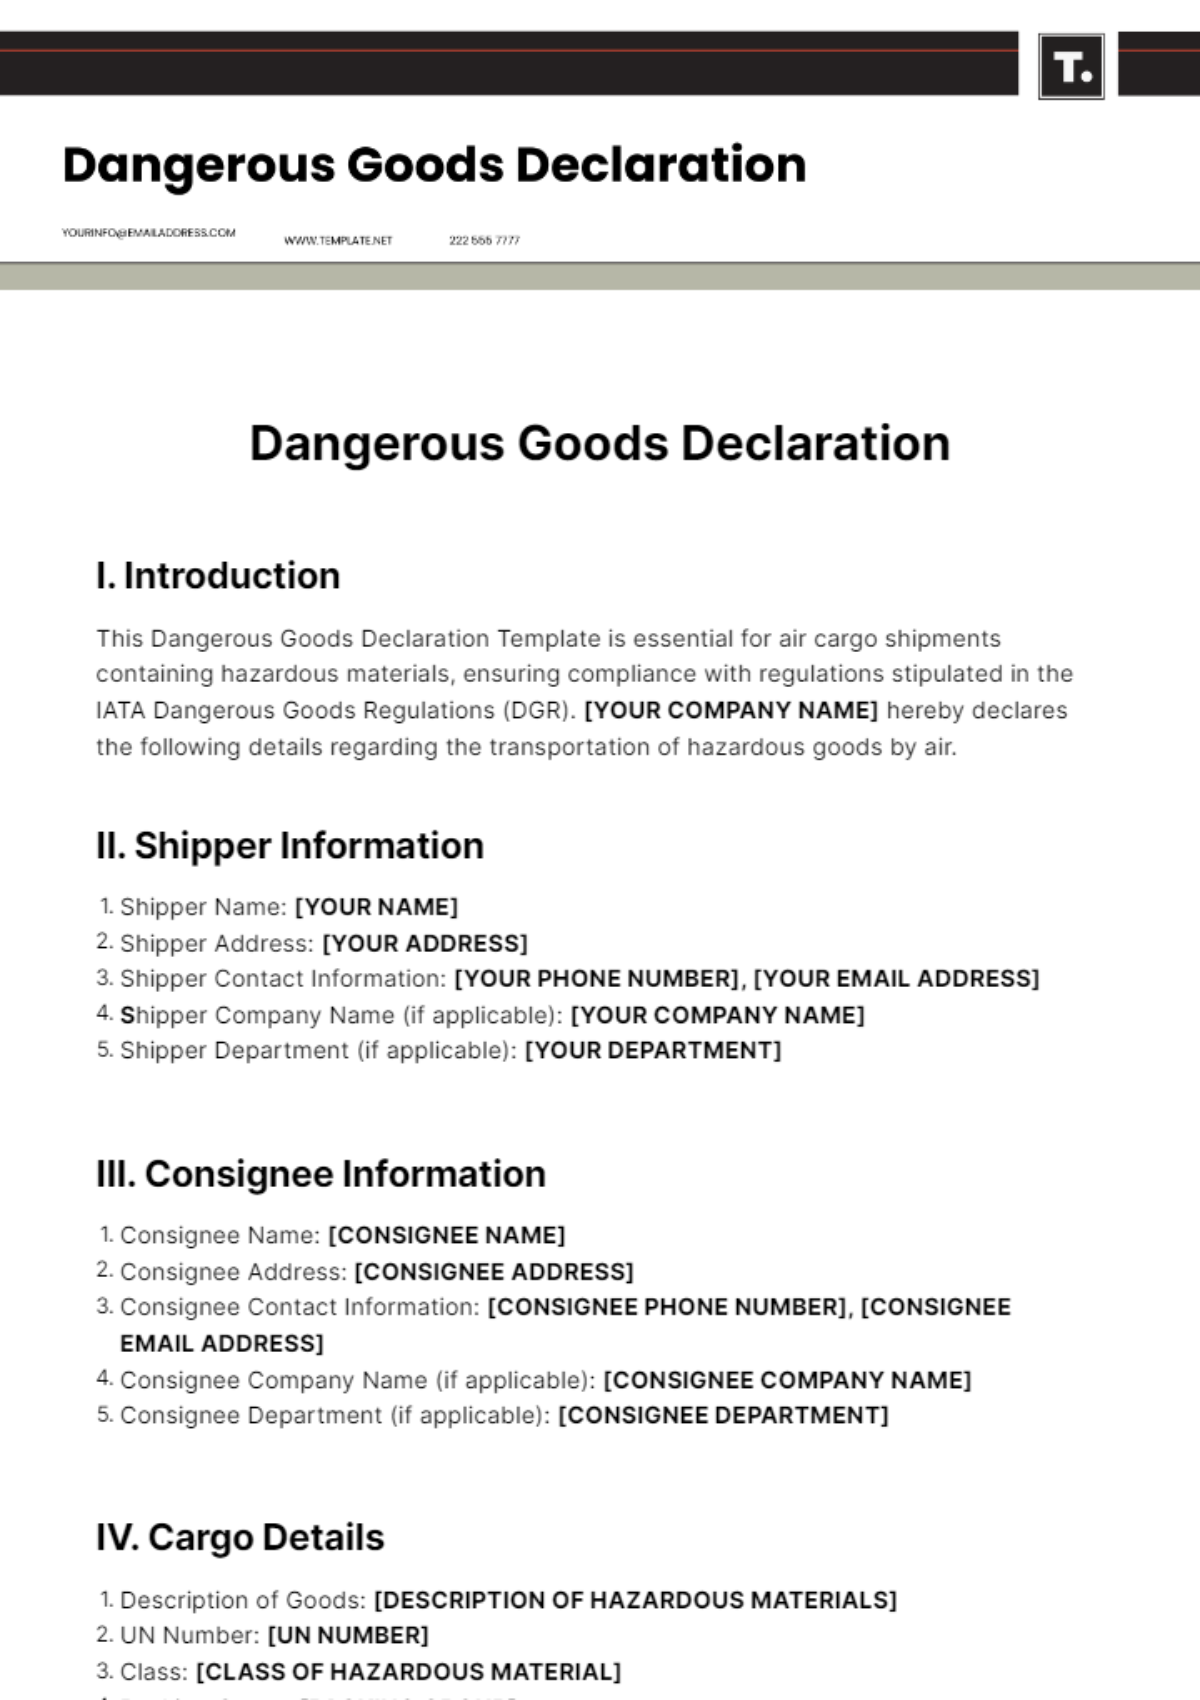 Dangerous Goods Declaration Template